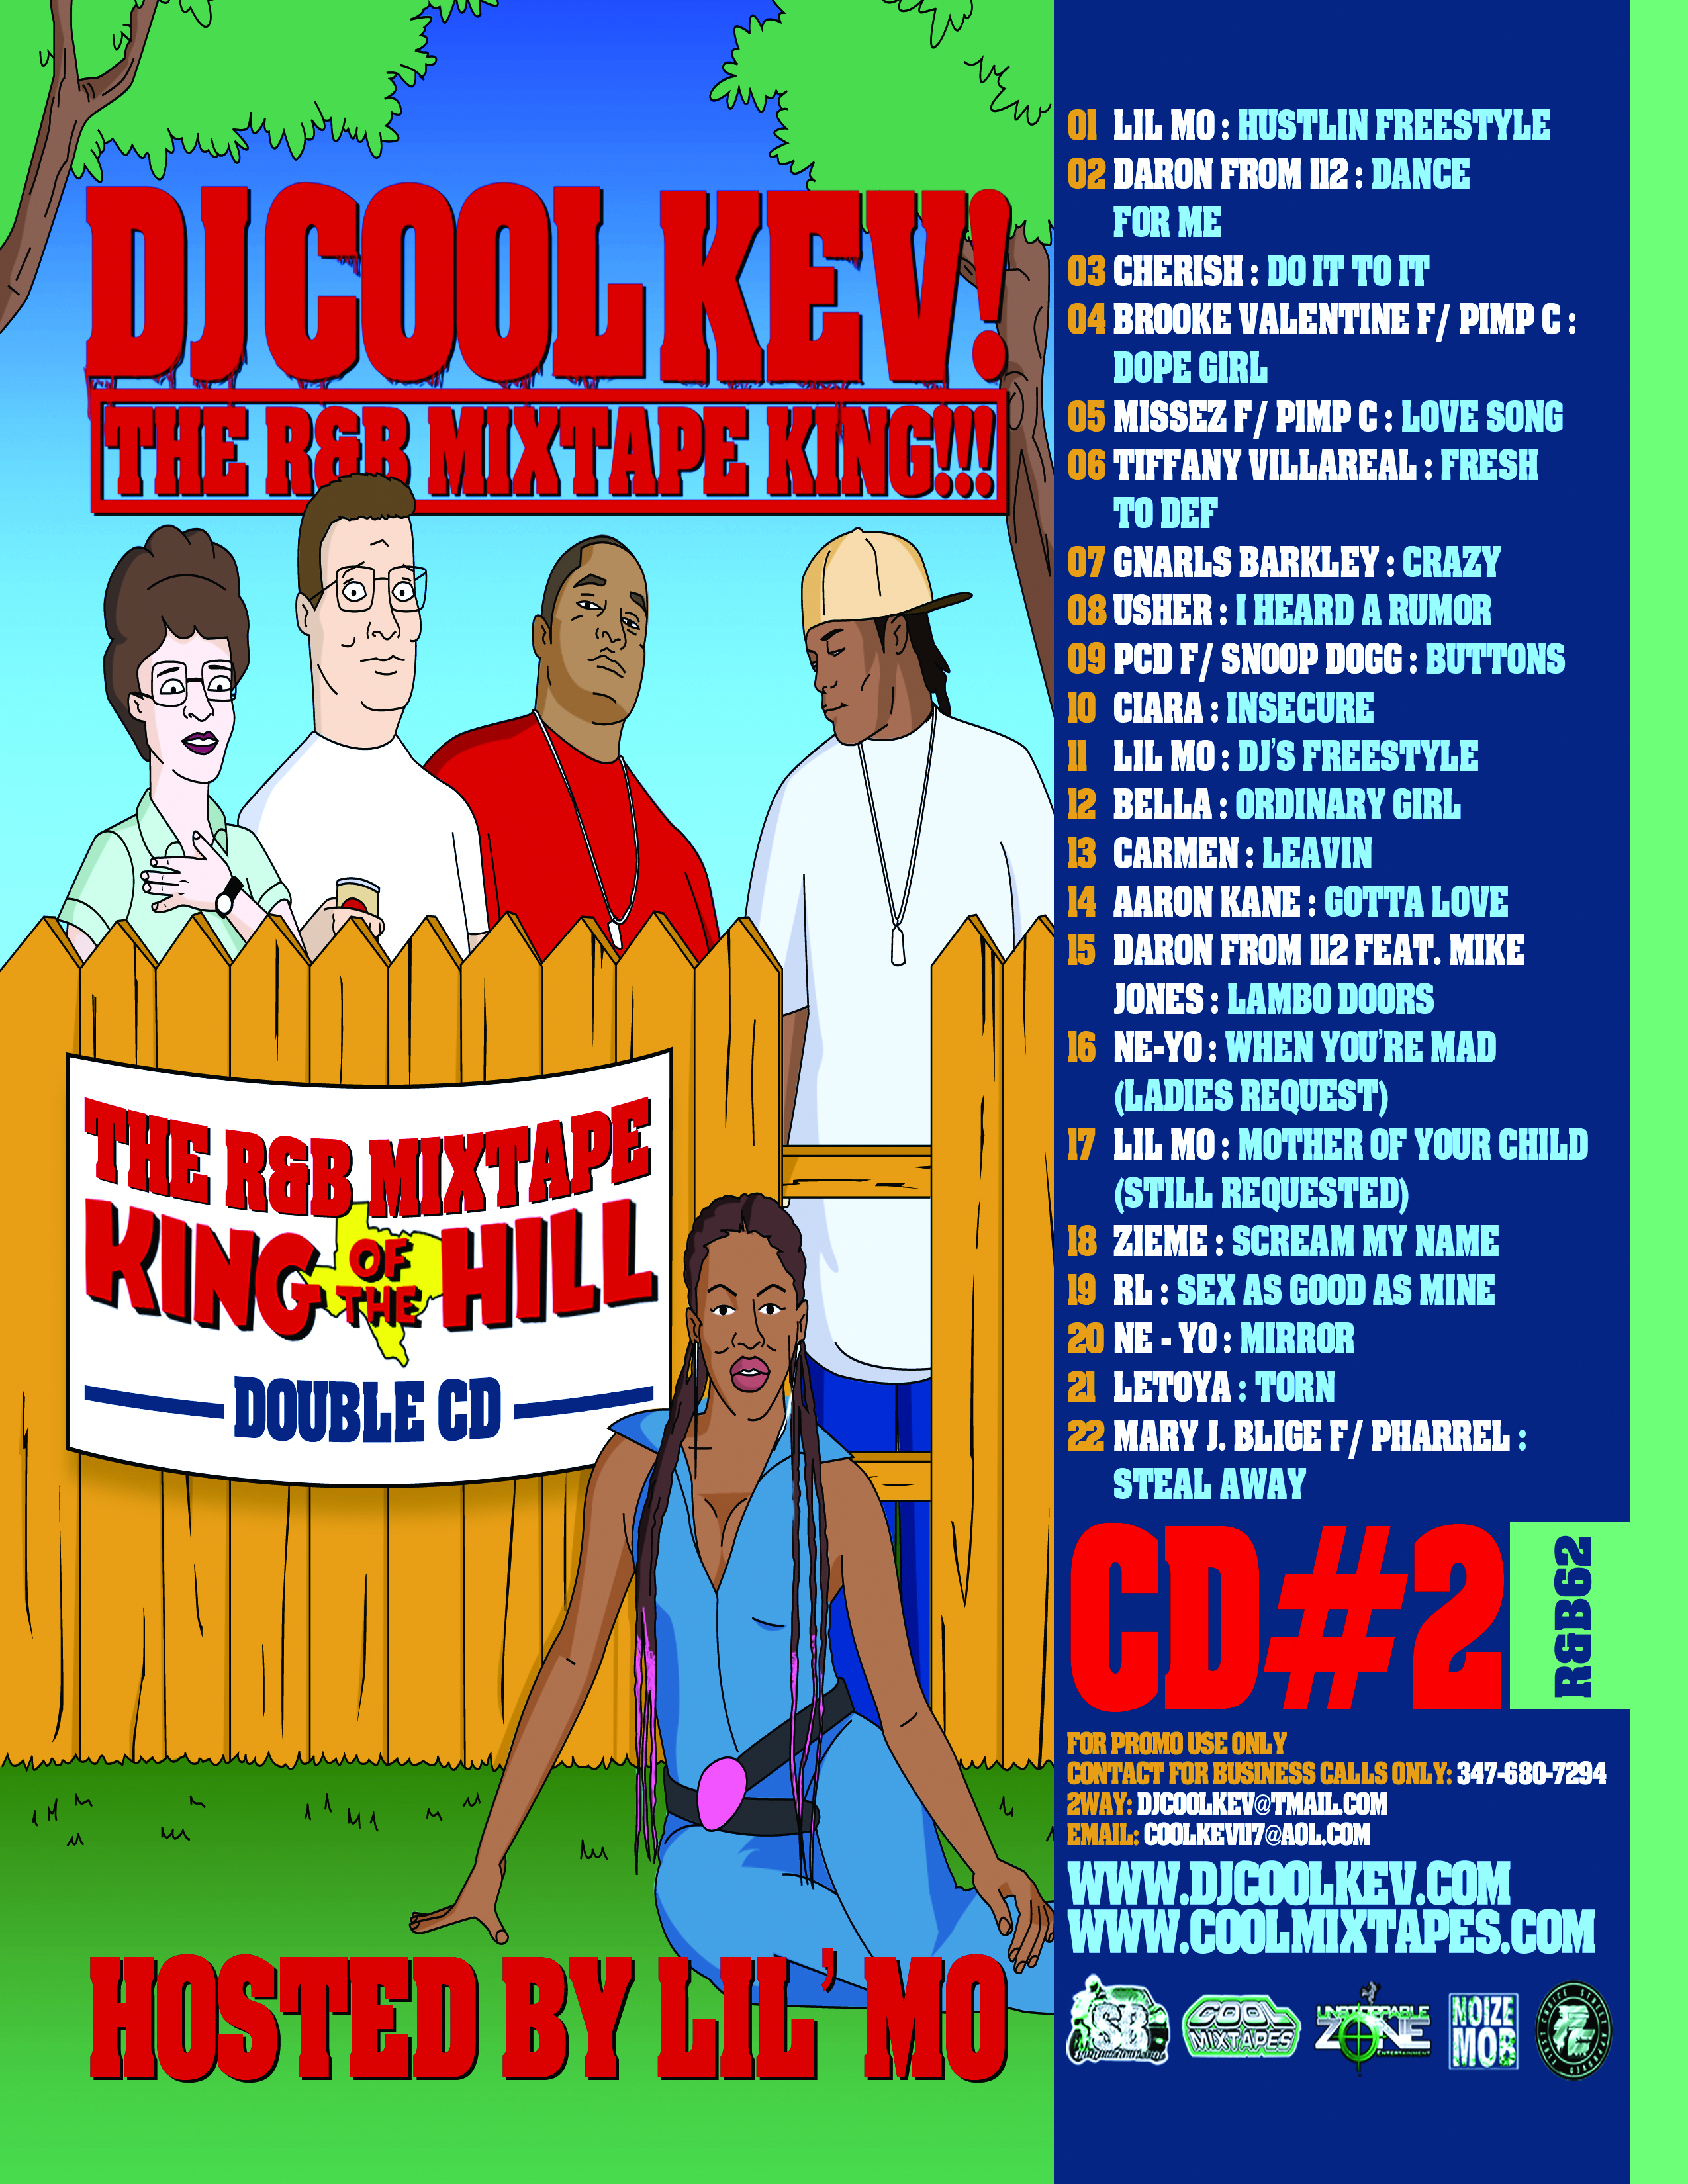 DJ Cool Kev – R&B 62 CD # 2, R&B, RNB, Throwback R&B, Mixtape Downloads, Downloads